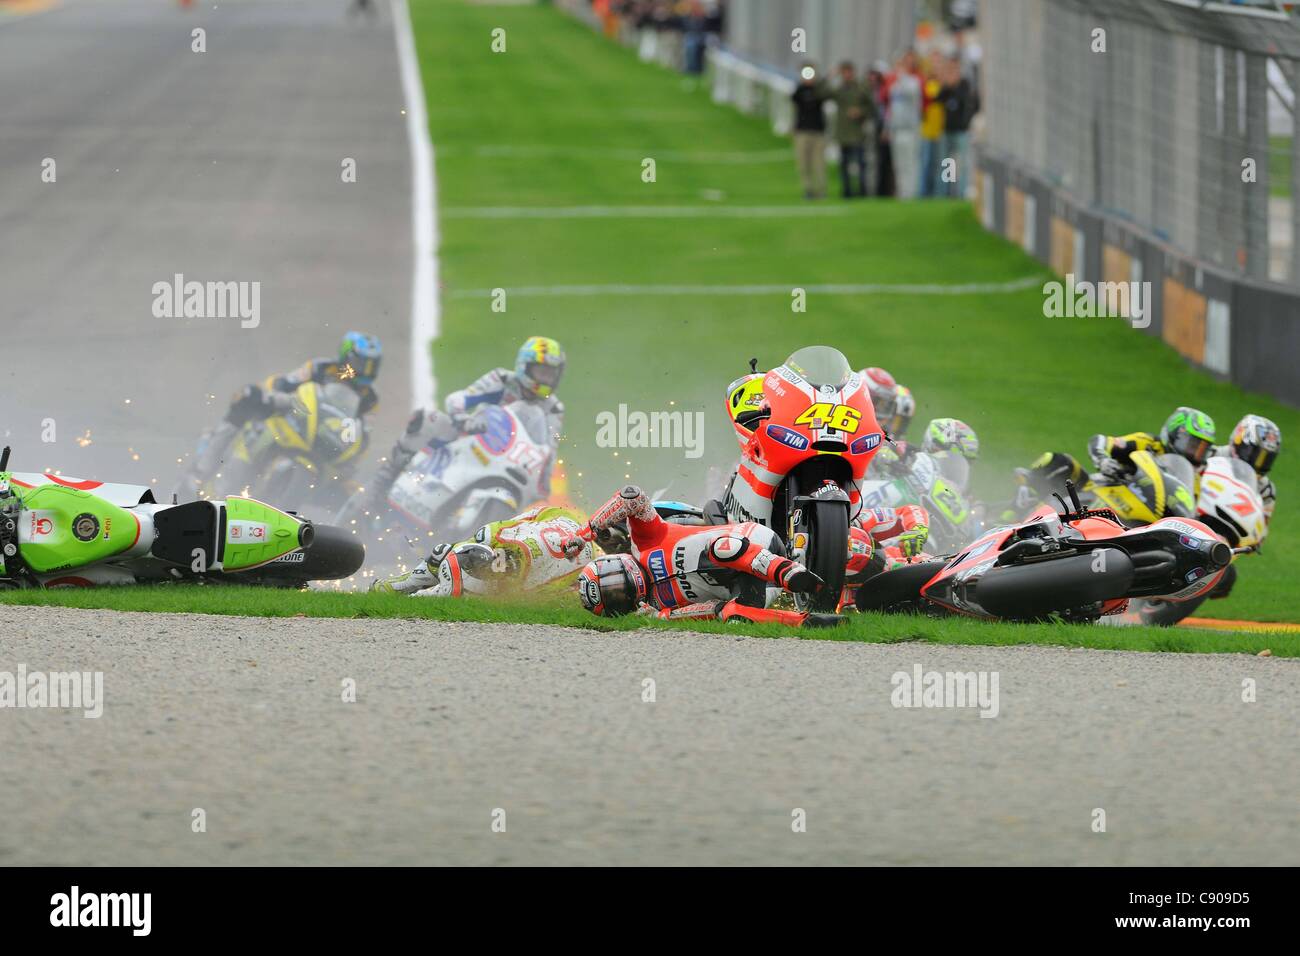 06.11.2011. Valence, Espagne. Classe MotoGP photo montre l'accident entre Nicky  Hayden et Valentino Rossi Photo Stock - Alamy